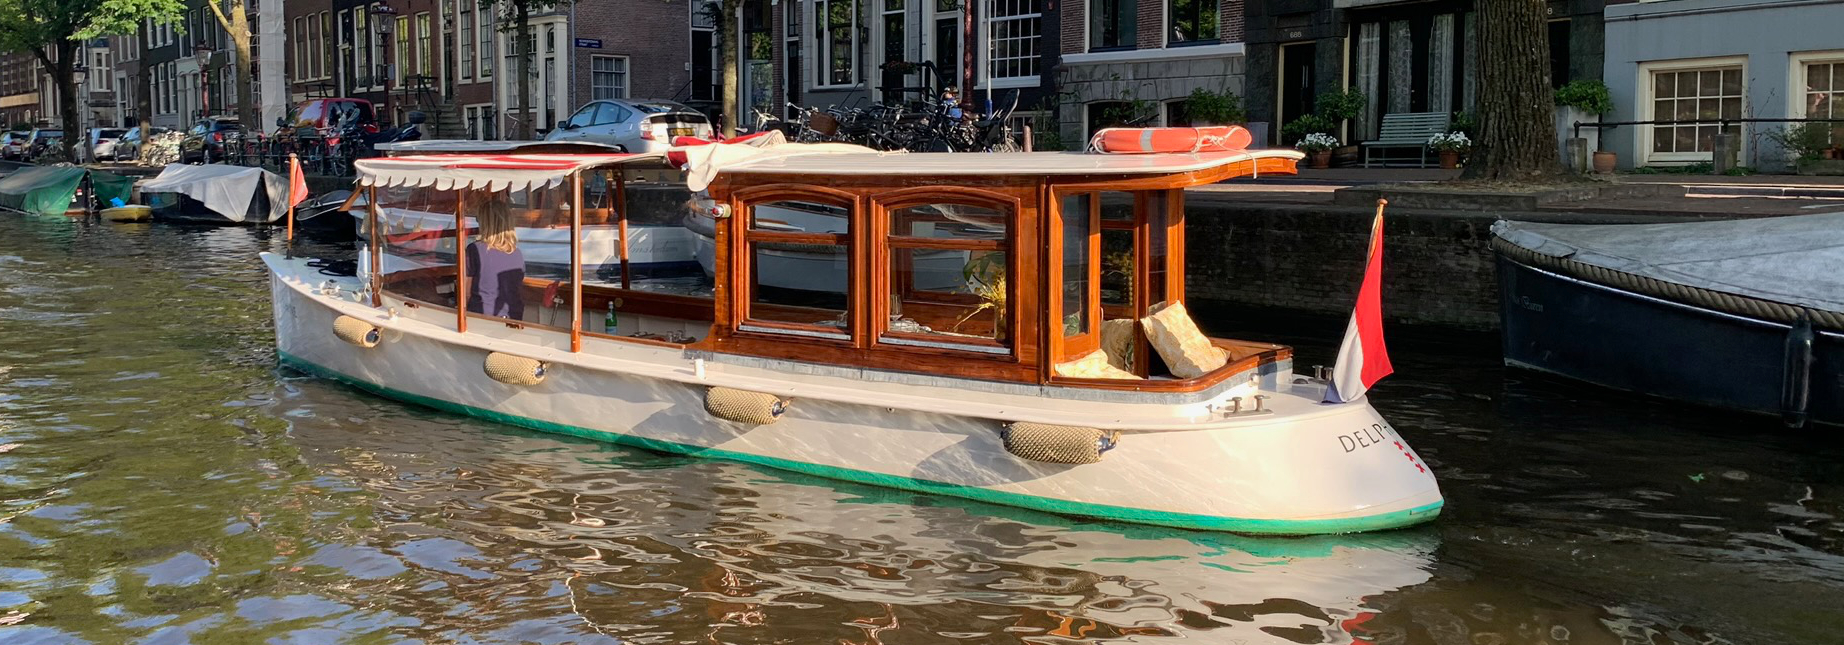 Rock That Boat Amsterdam